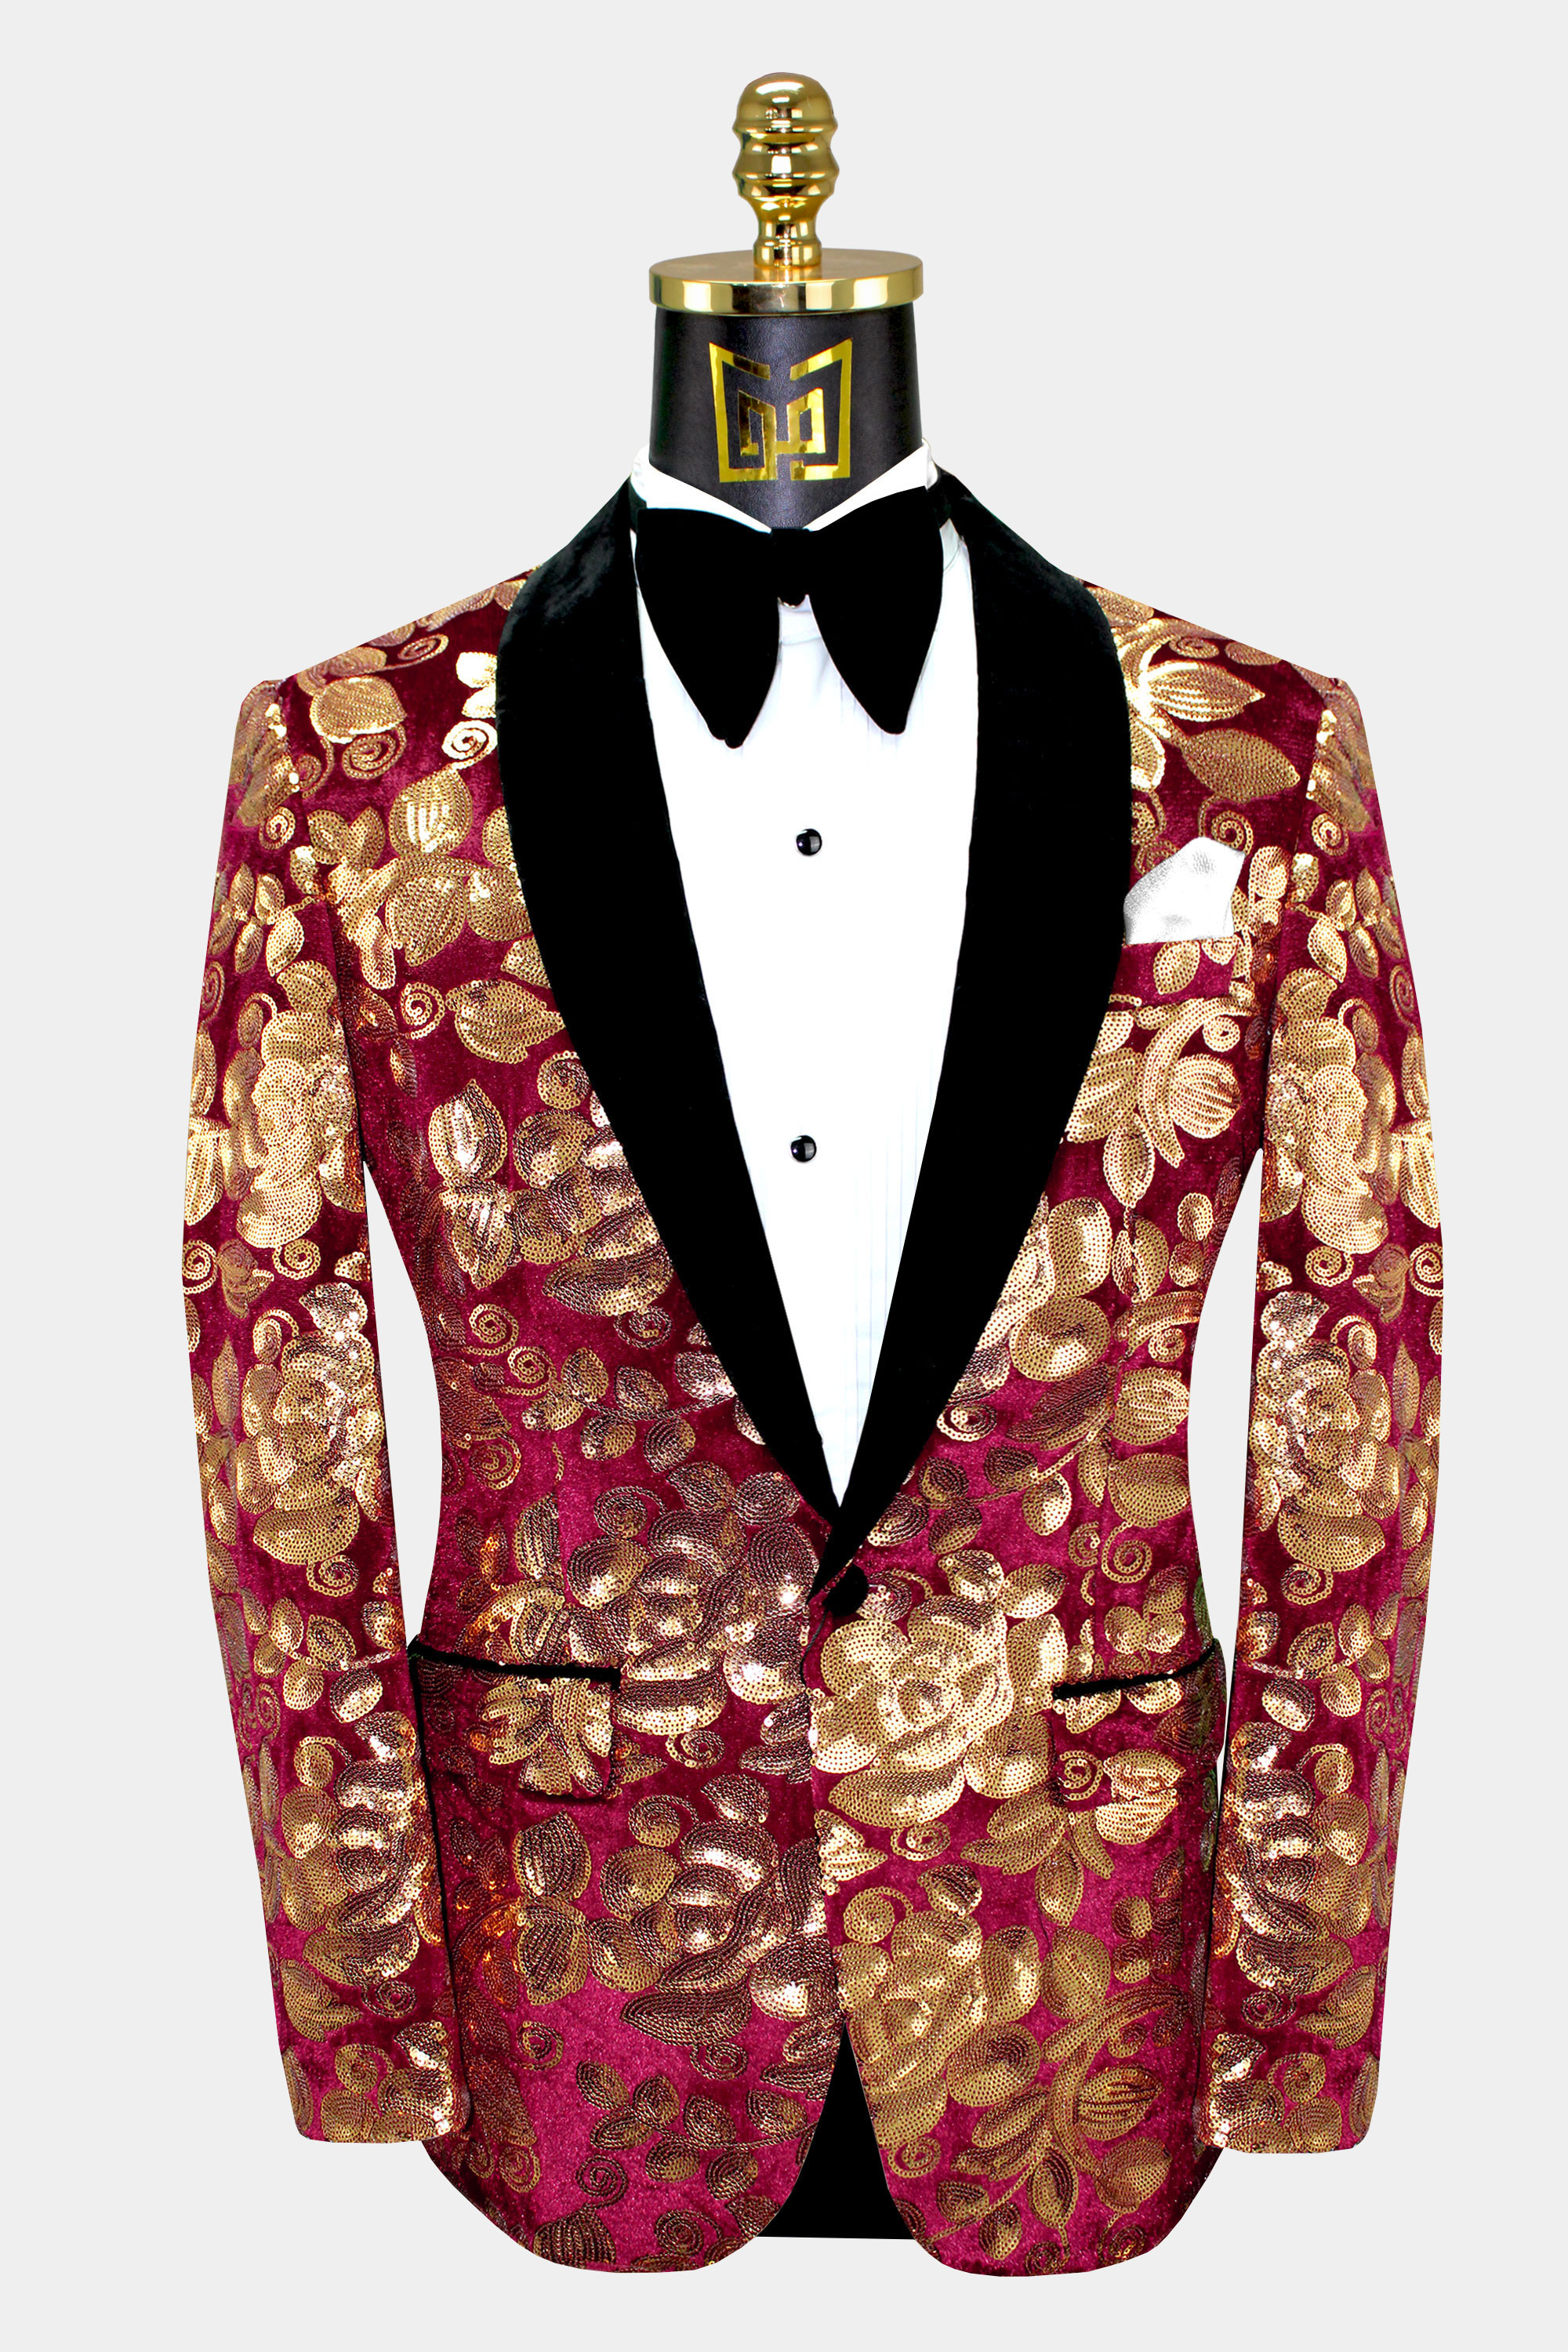 Mens-Burgundy-and-Gold-Tuxedo-Jacket-Sequin-Bling-Prom-Blazer-Suit-from-Gentlemansguru.com